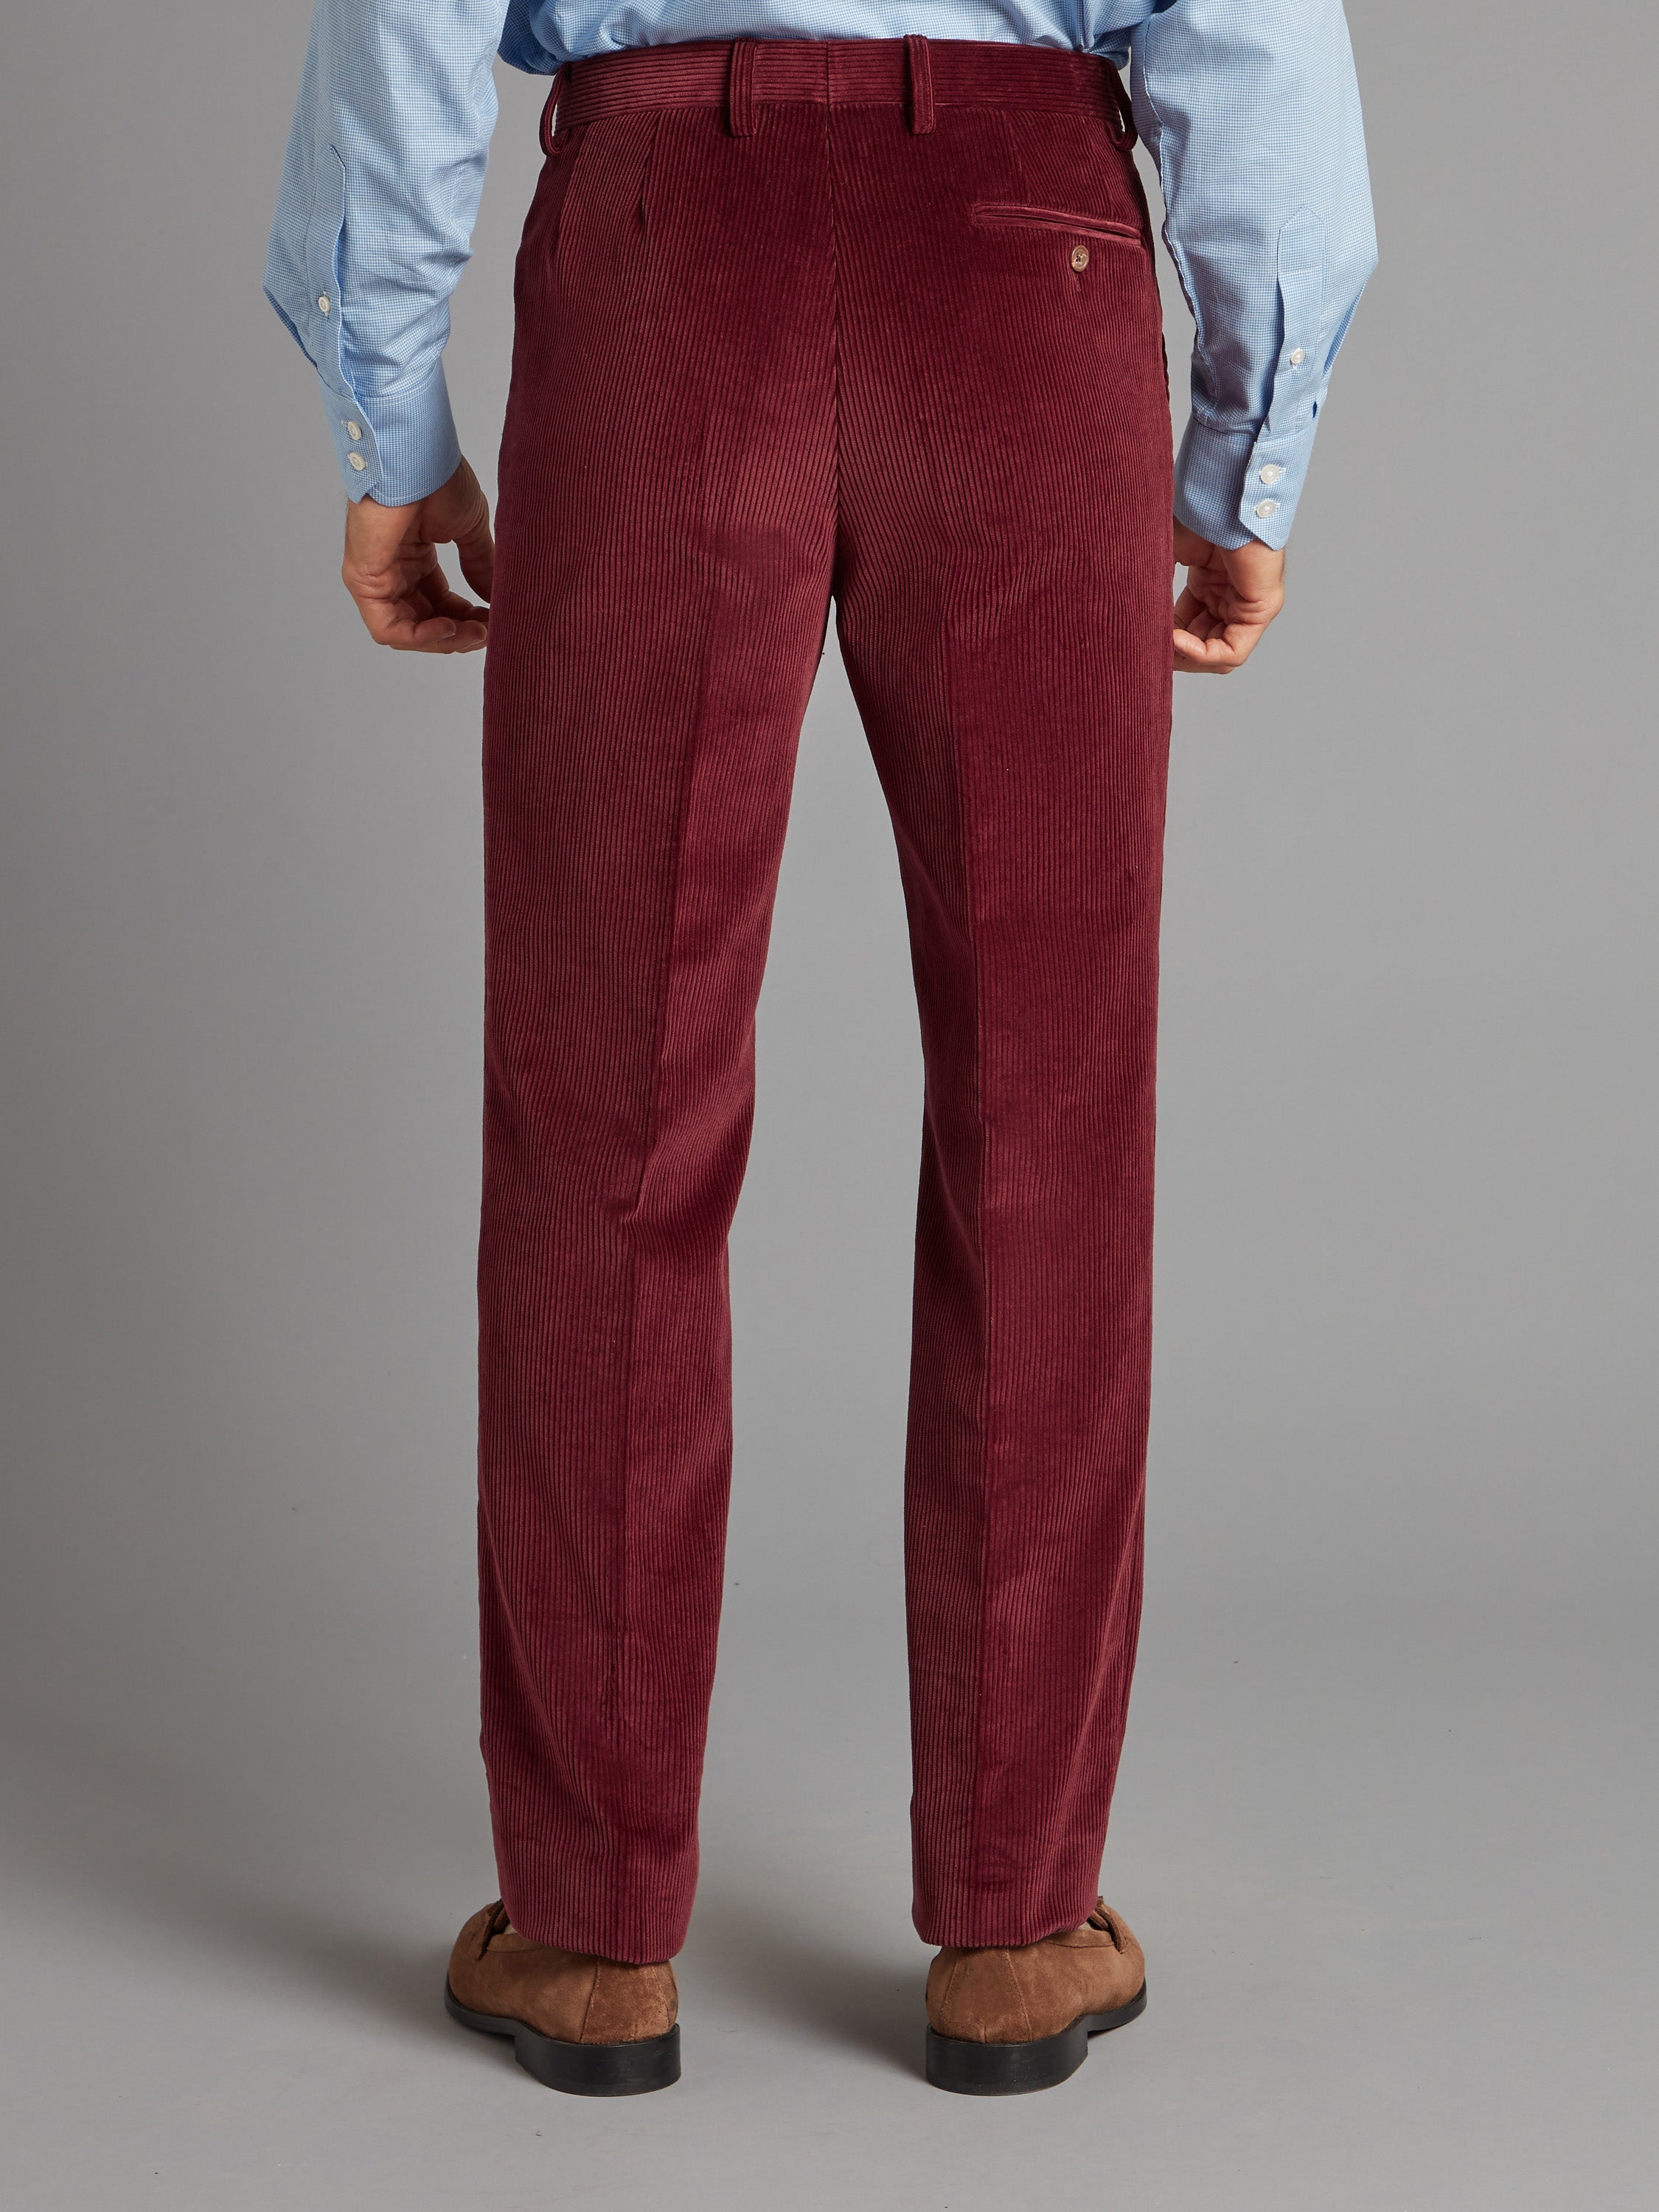 ZADIG & VOLTAIRE Burgundy Cotton Stretch Corduroy Trousers Jeans Pants  Sz:36 / S | eBay